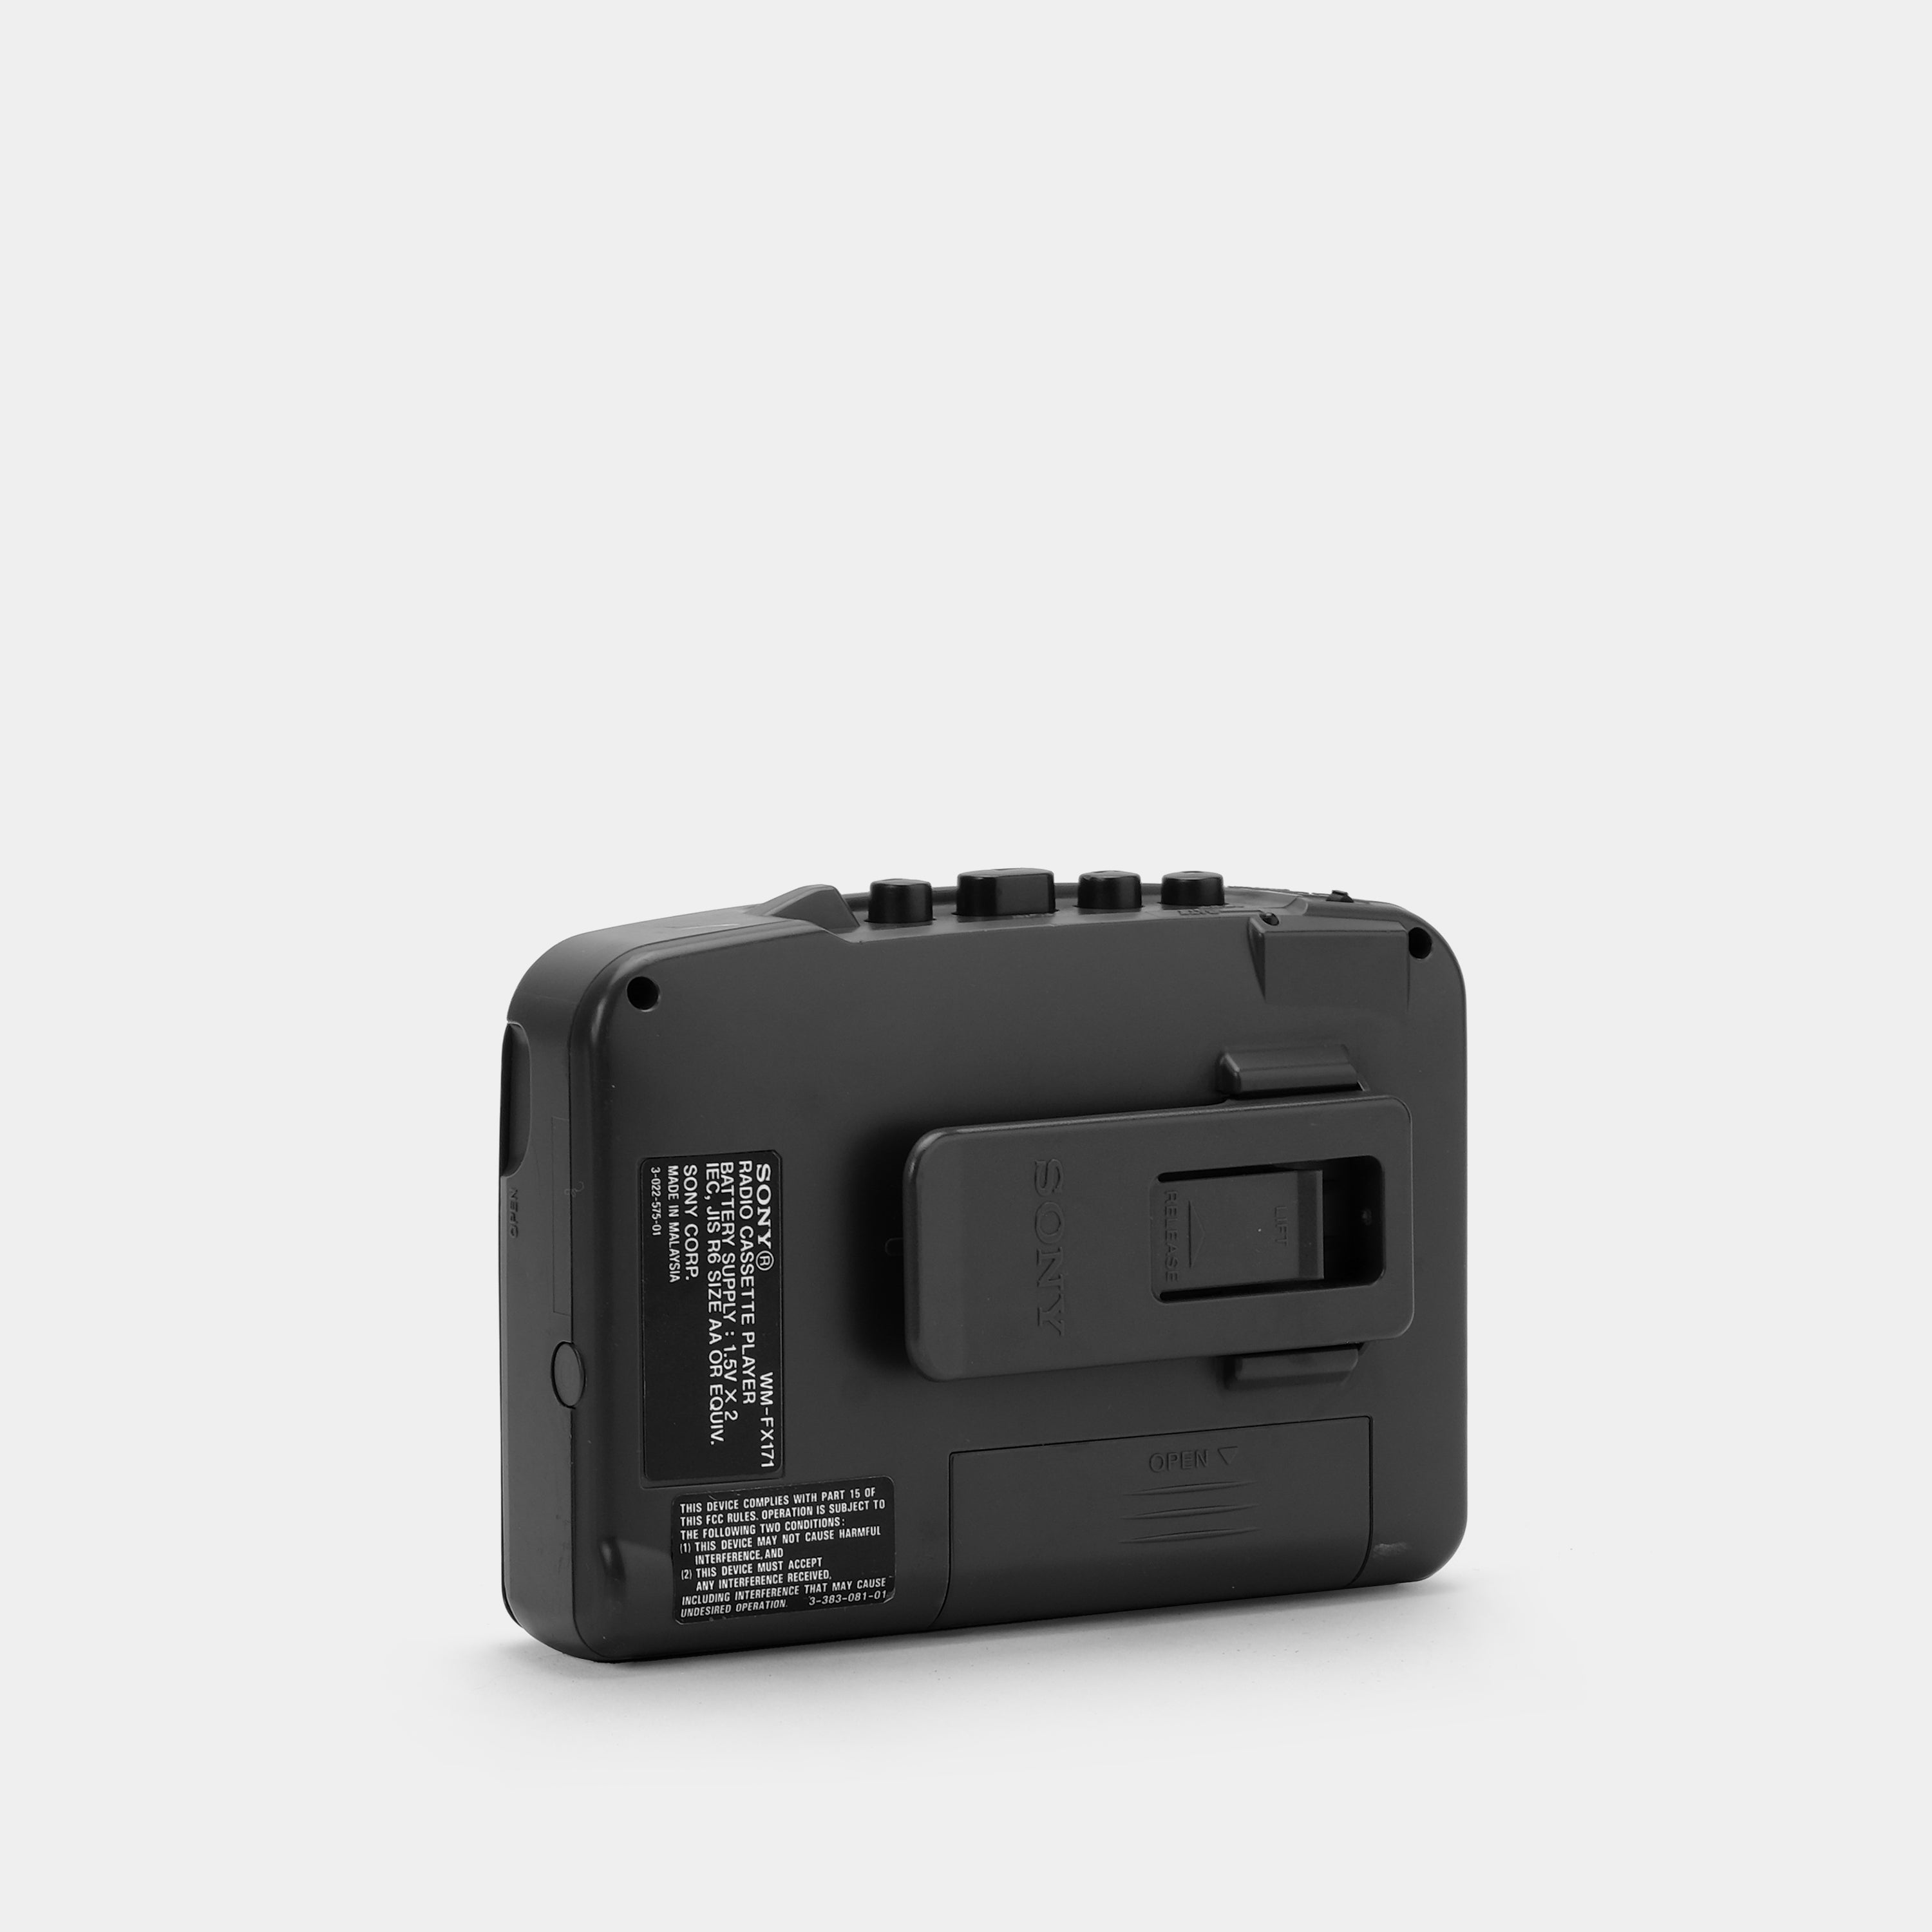 Sony Walkman WM-FX171 AM/FM Portable Cassette Player